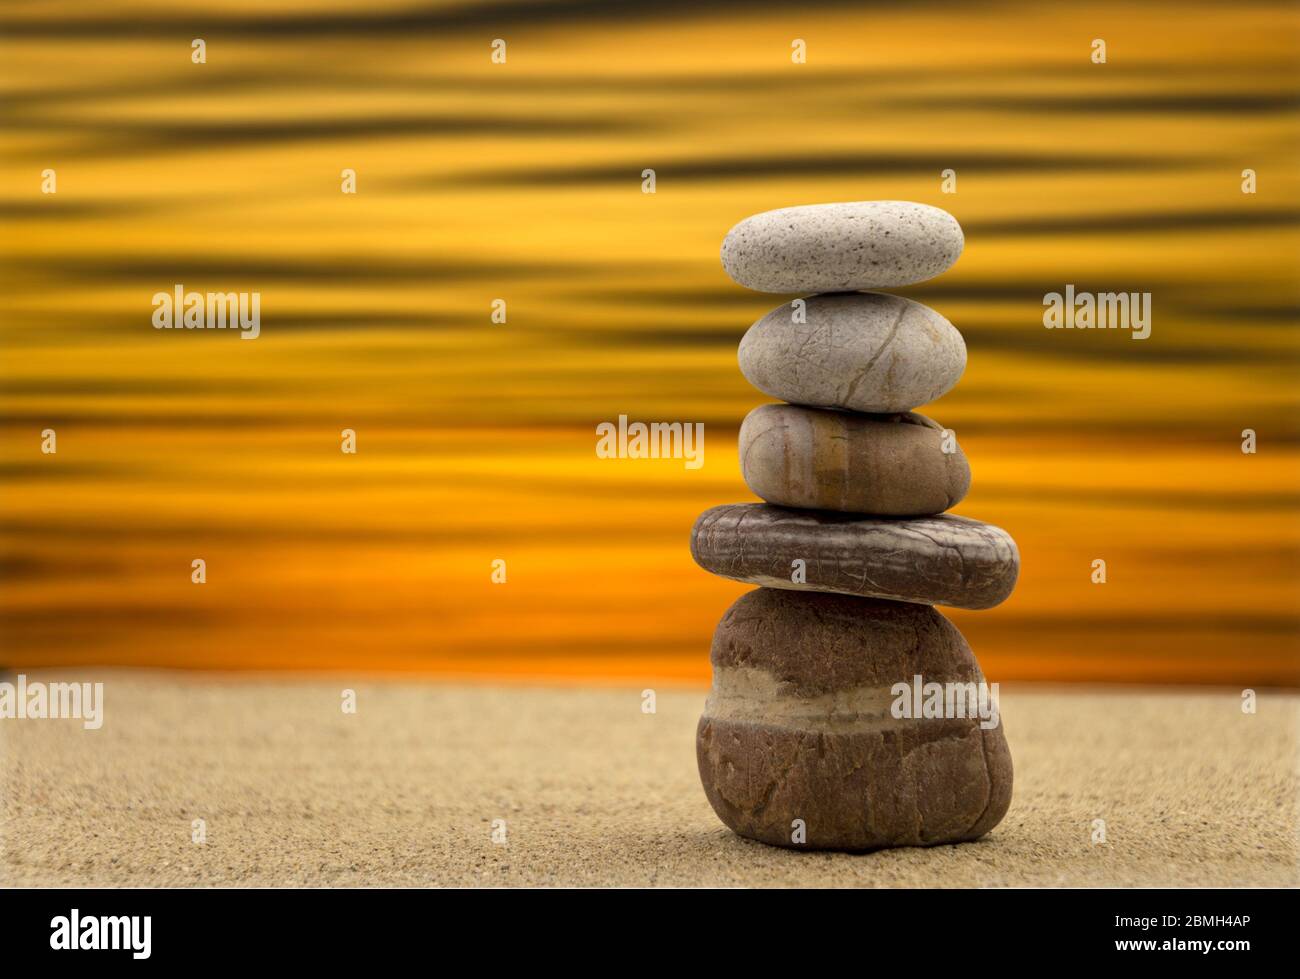 Zen stones balanced on the beach Stock Photo